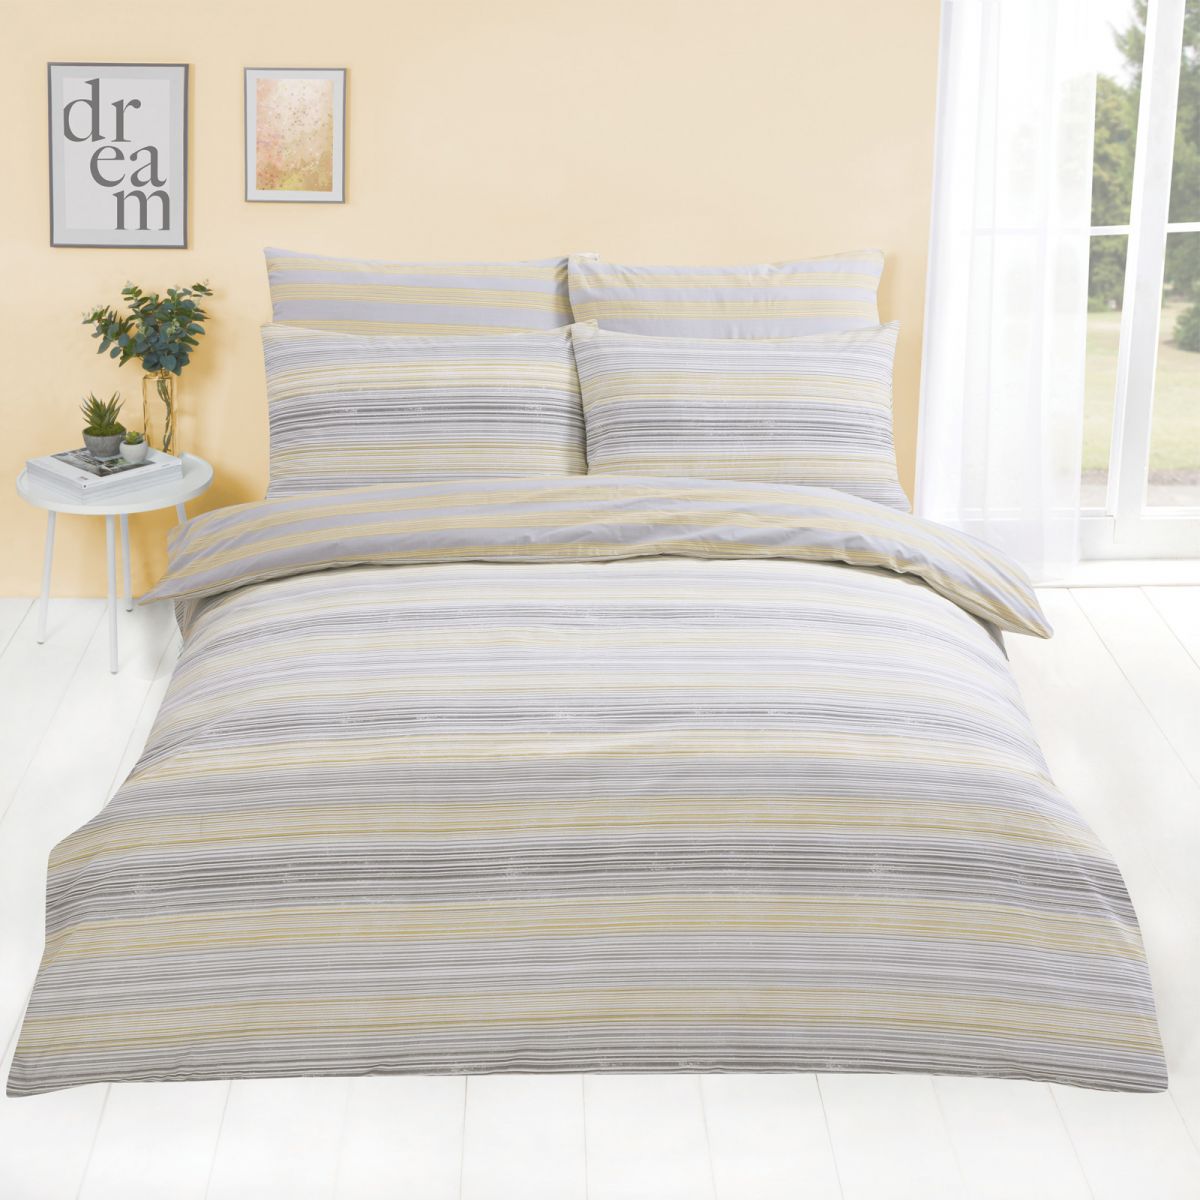 Dreamscene Speckle Stripe Duvet Cover with Pillowcase, Yellow - Single